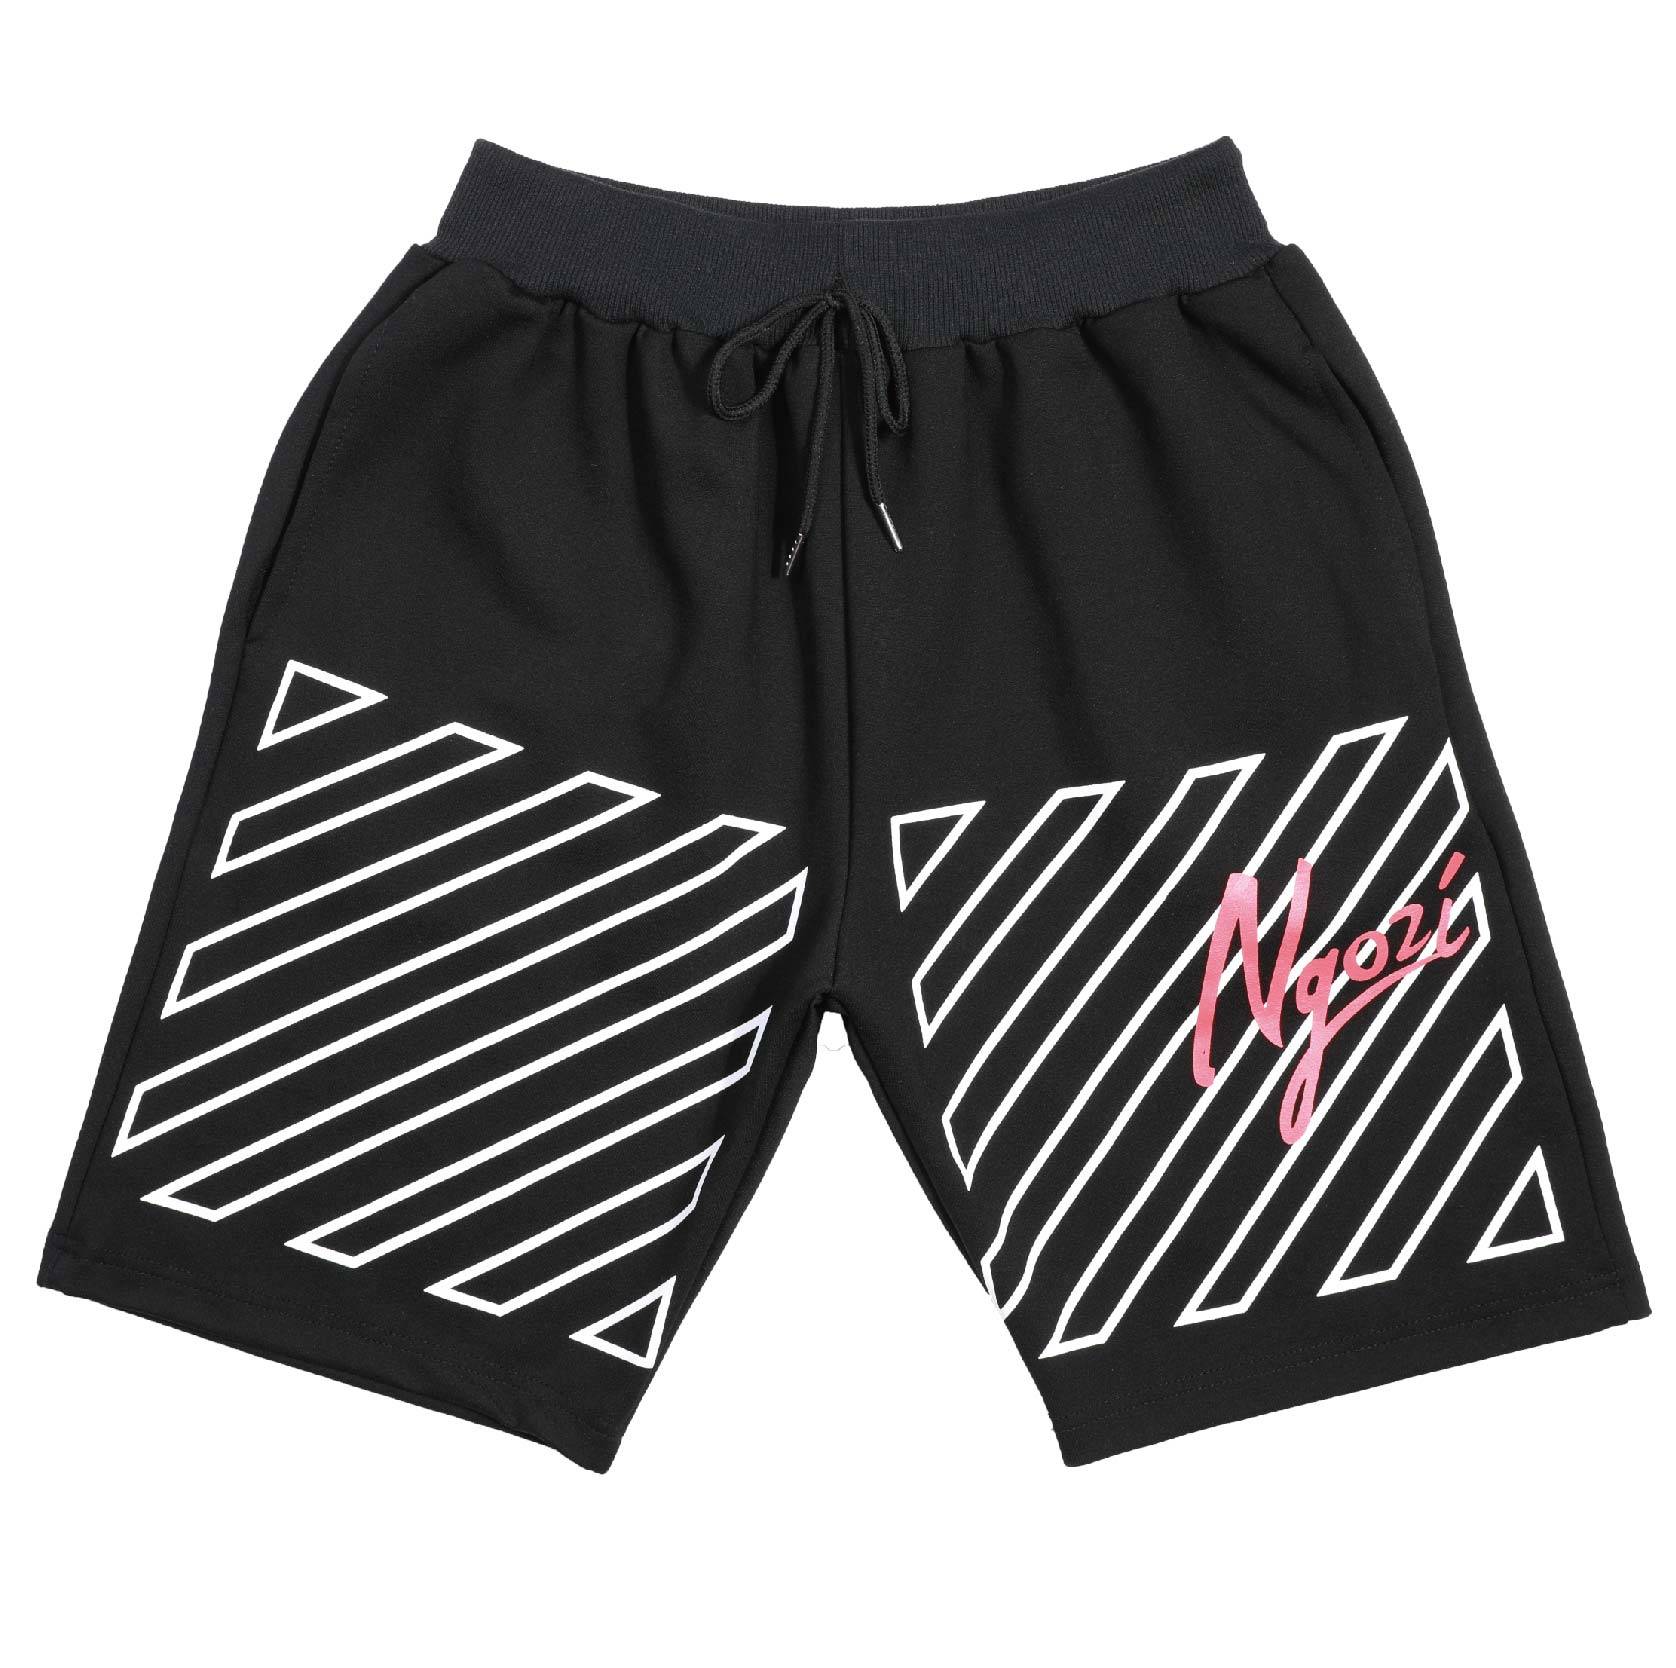 Low MOQ for Oversized Denim Jacket - Ngozi Men’s Outdoor Lightweight Quick Dry Hiking Shorts/ Sports Casual Shorts – Fullerton